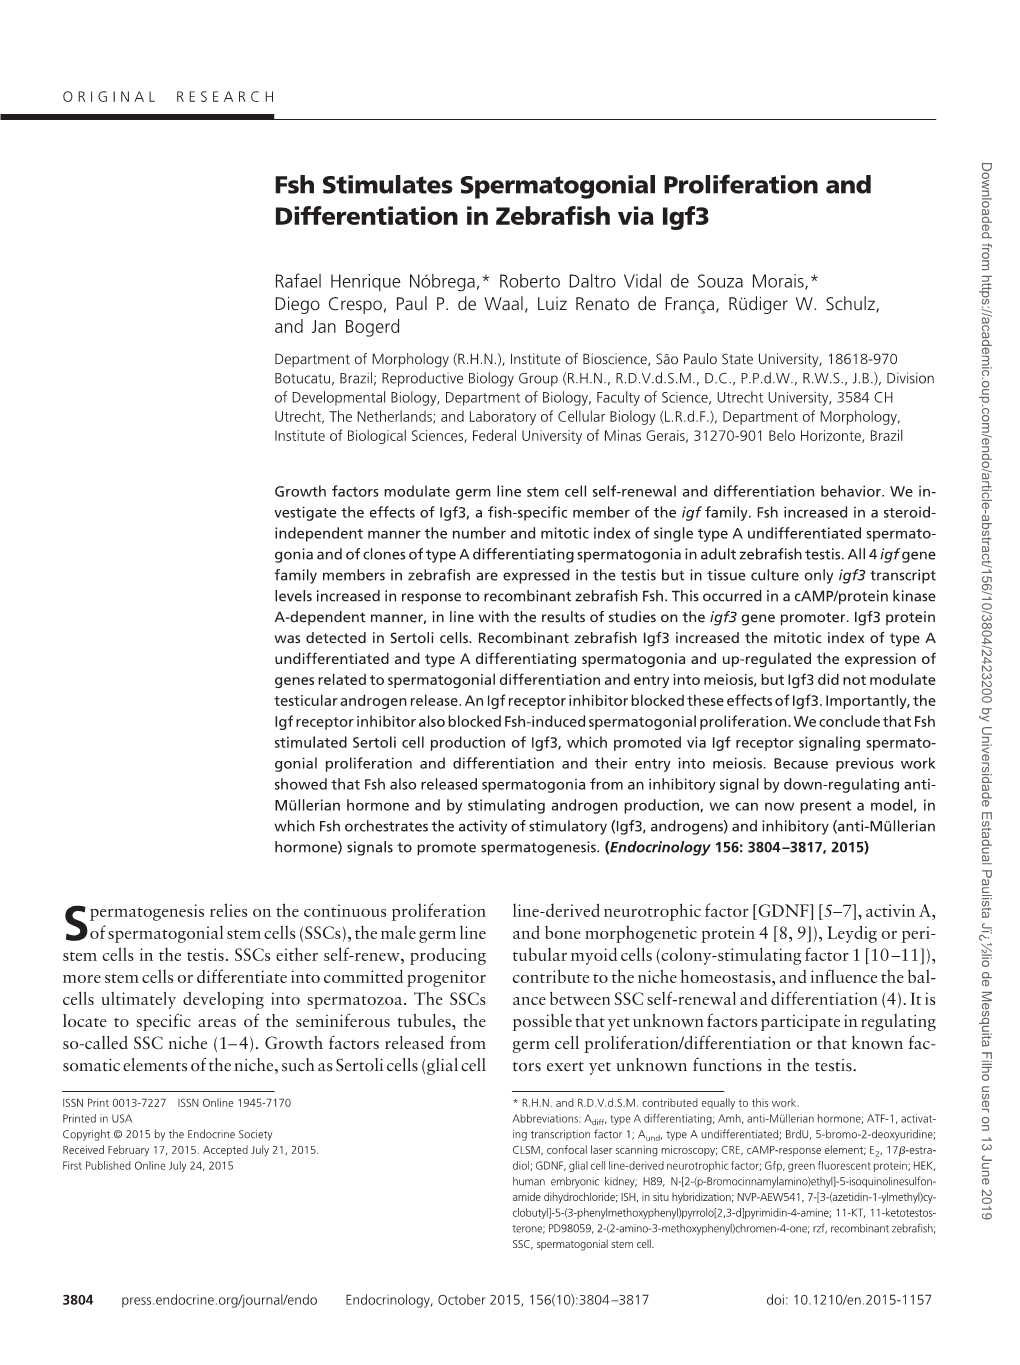 Fsh Stimulates Spermatogonial Proliferation and Differentiation in Zebrafish Via Igf3